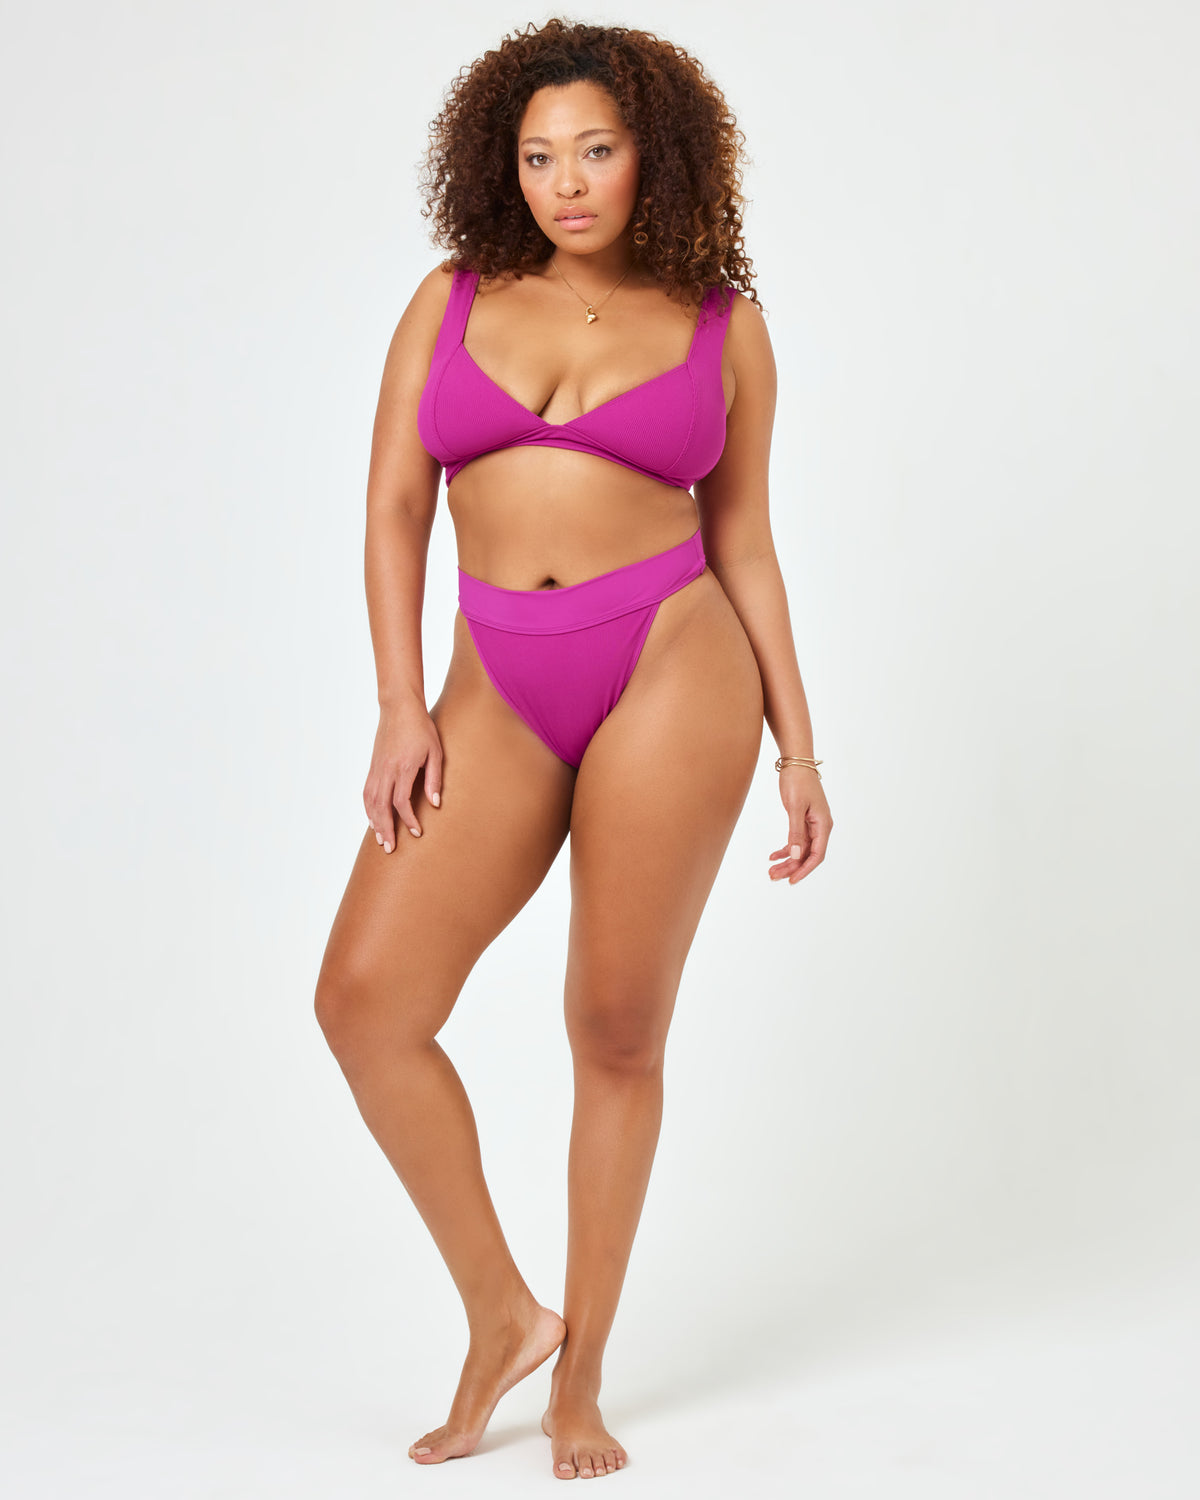 Ribbed Lola Bikini Bottom - Berry Berry | Model: Amber (size: XL)